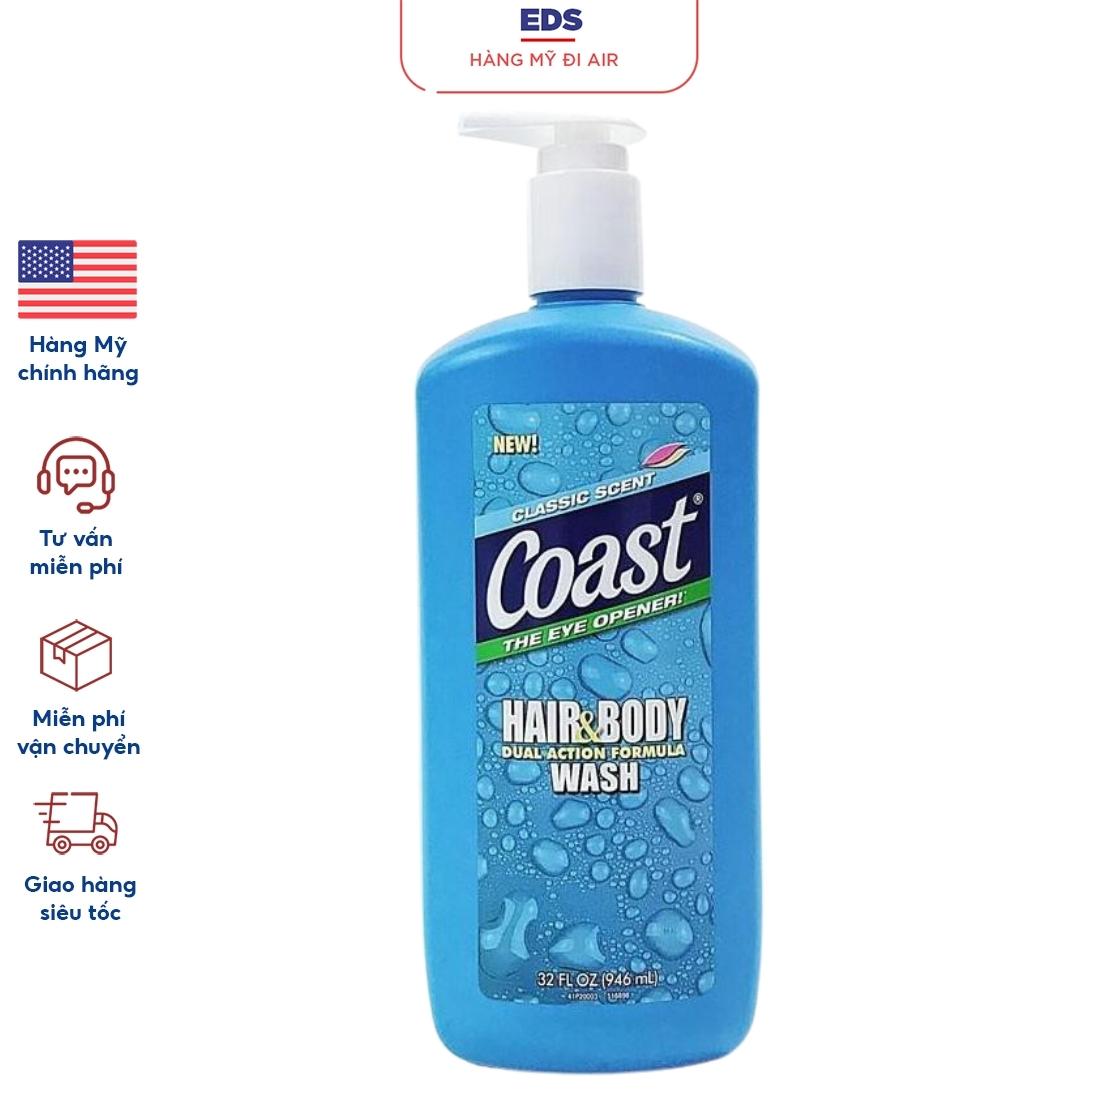 Sữa tắm gội toàn thân nam Coast Hair & Body Wash Classic Scent 946ml